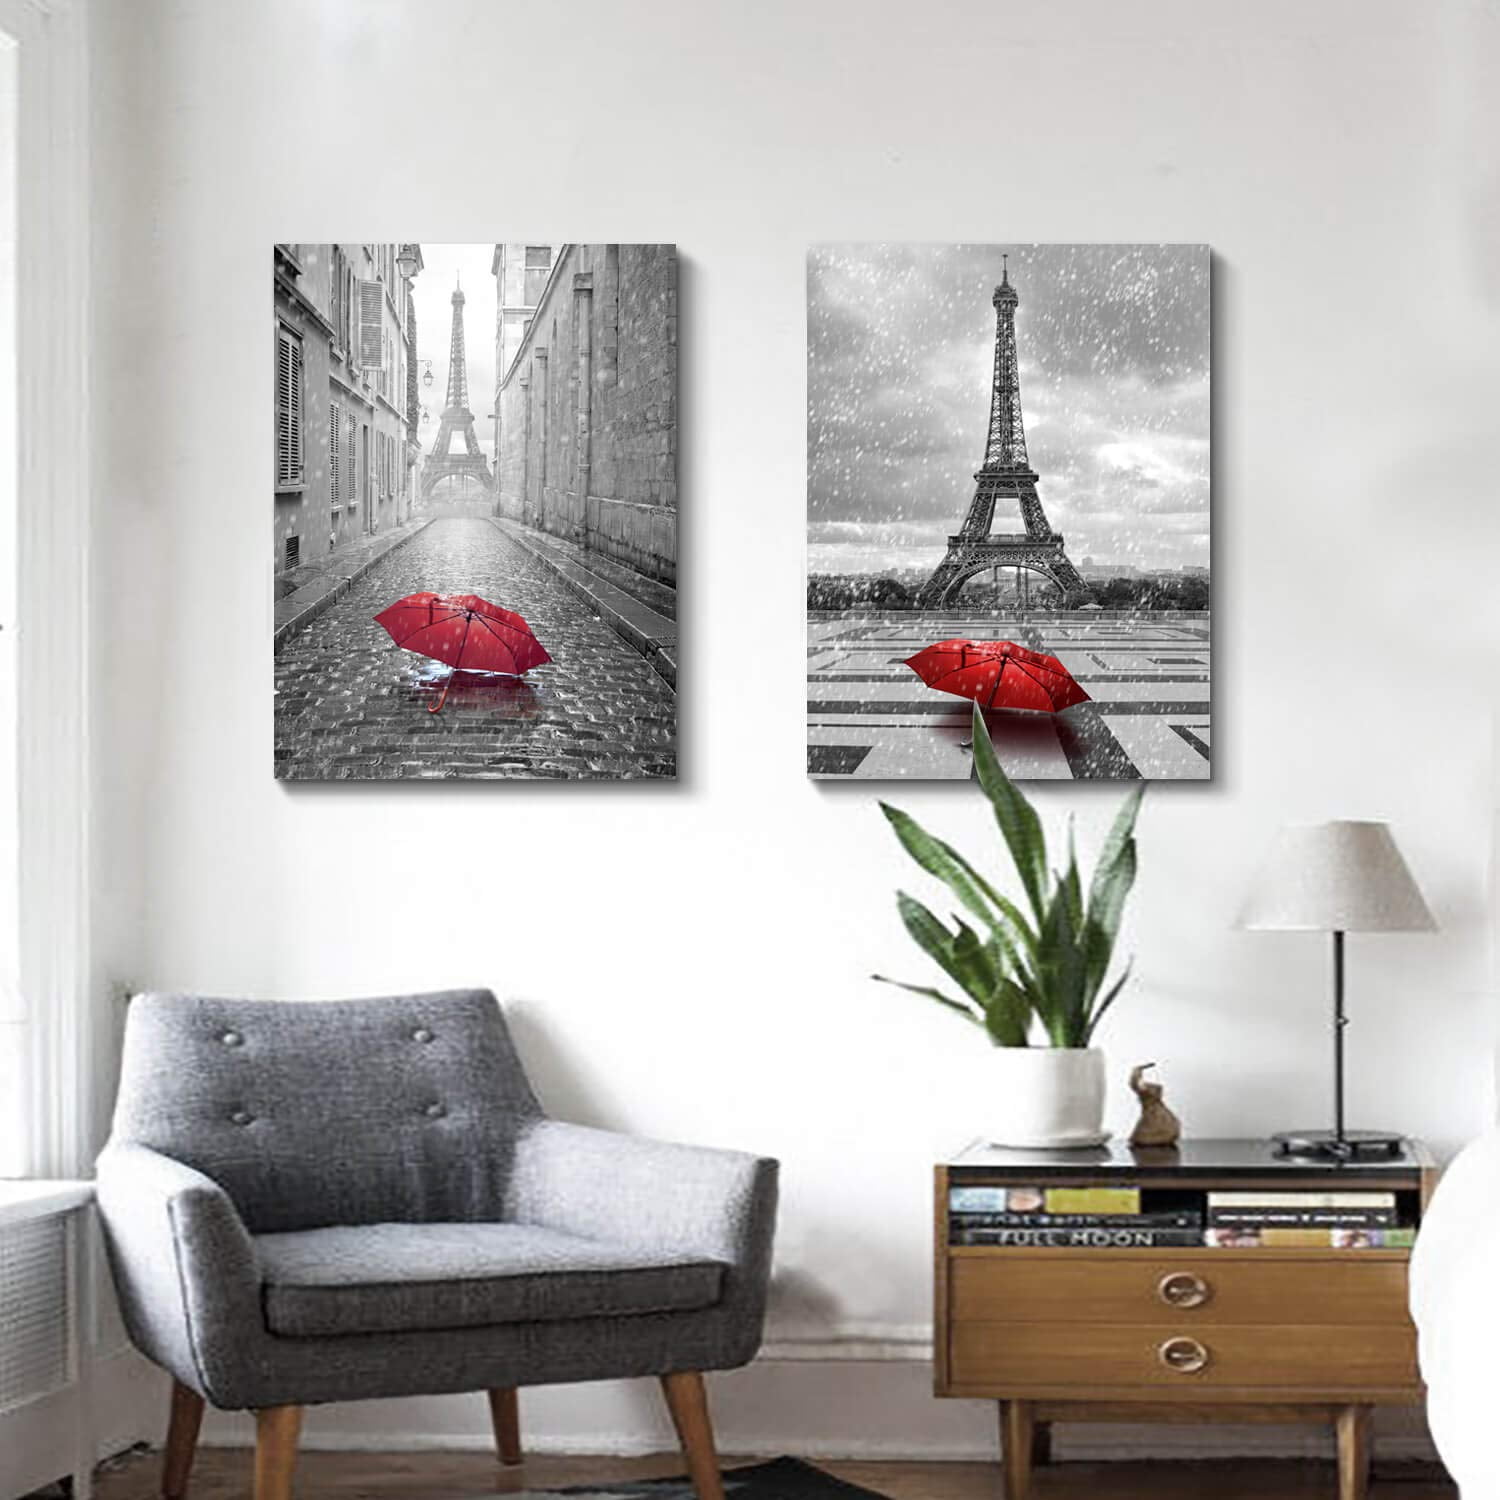 Art Tower Graphic Modern x Living Canvas & Wall White Cityspace x Eiffel Room (18\'\' Black Art Decor LIVEDITOR Print Painting 2pcs) for Paris Backgound 24\'\'